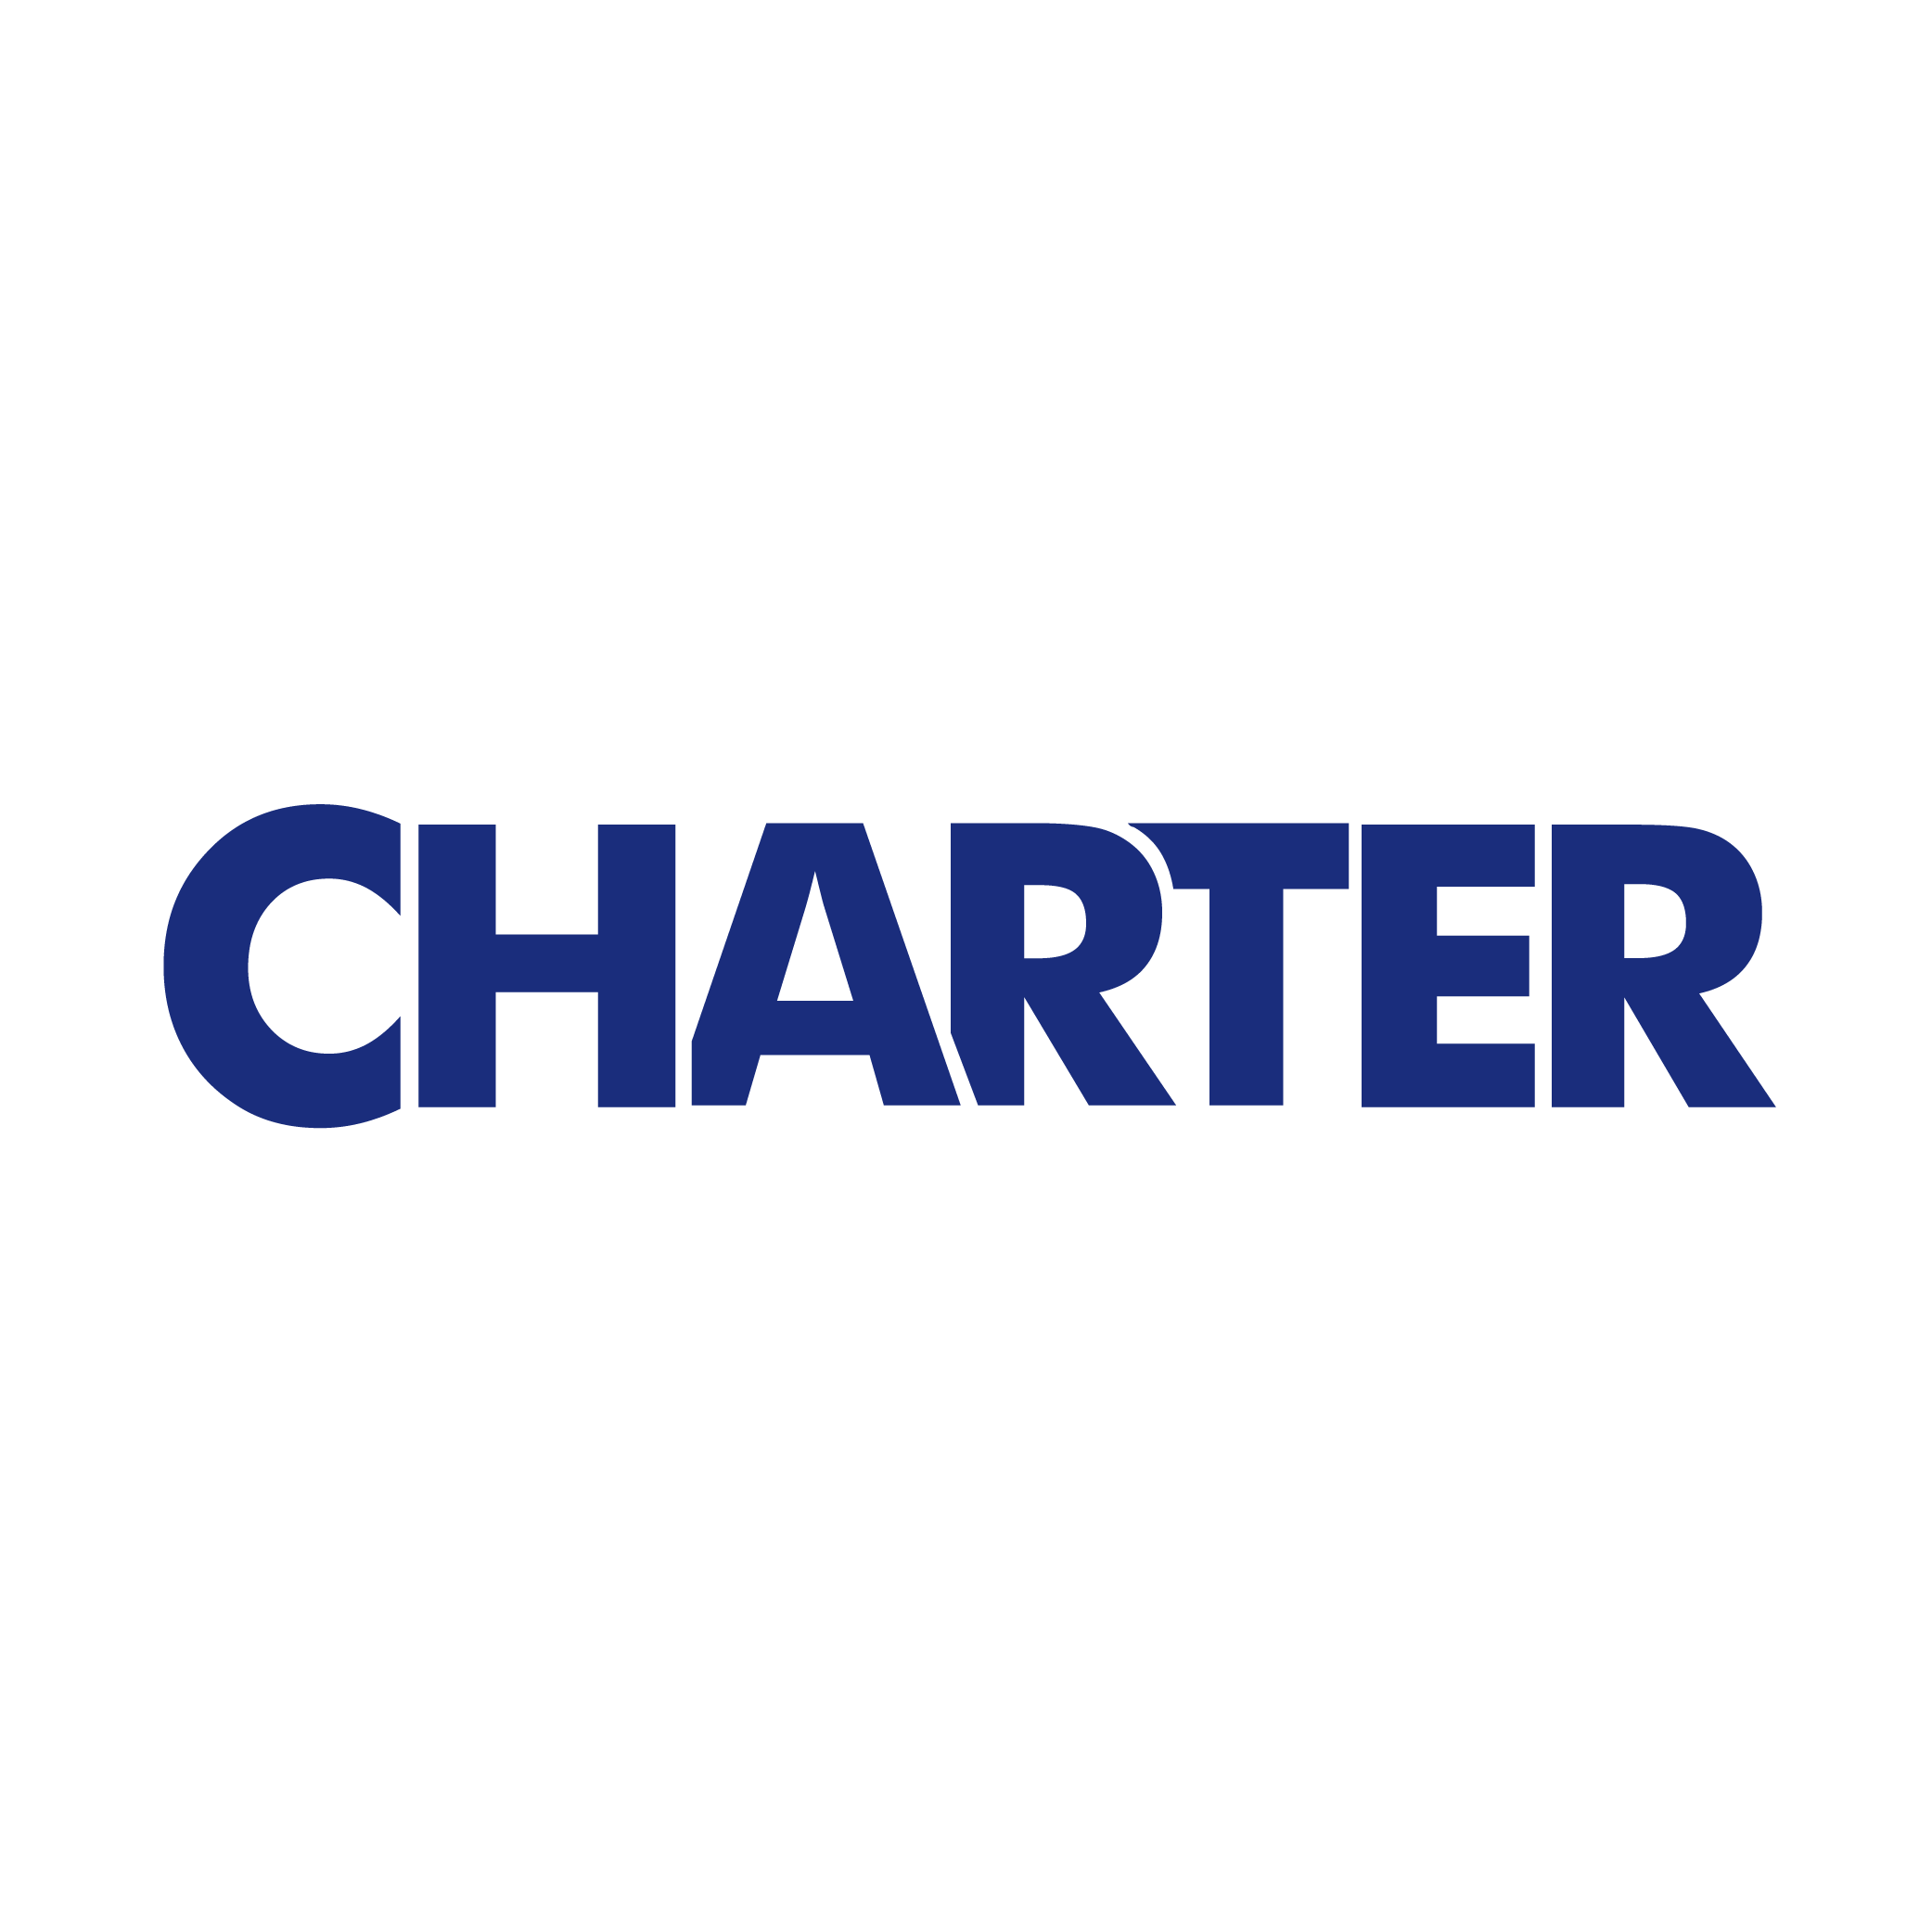 Charter Logo - Brand Identity Kit